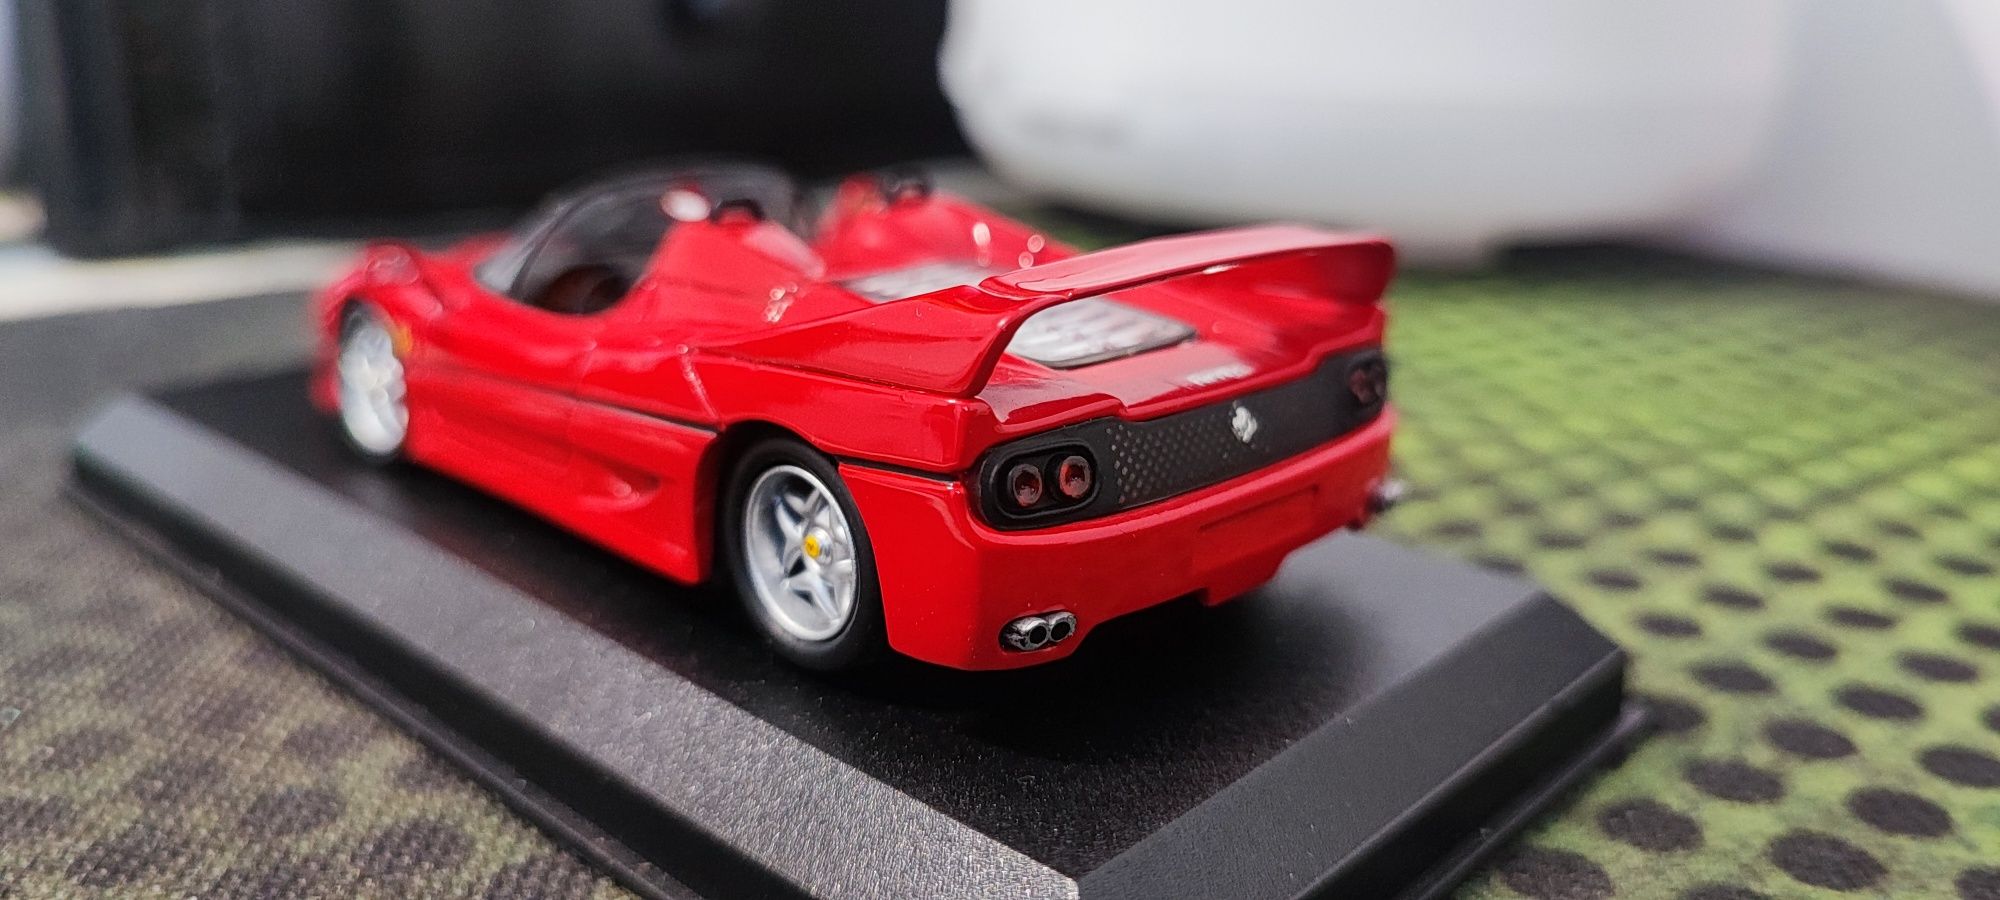 Macheta Ferrari F50 1:43 by Detail cars platinum